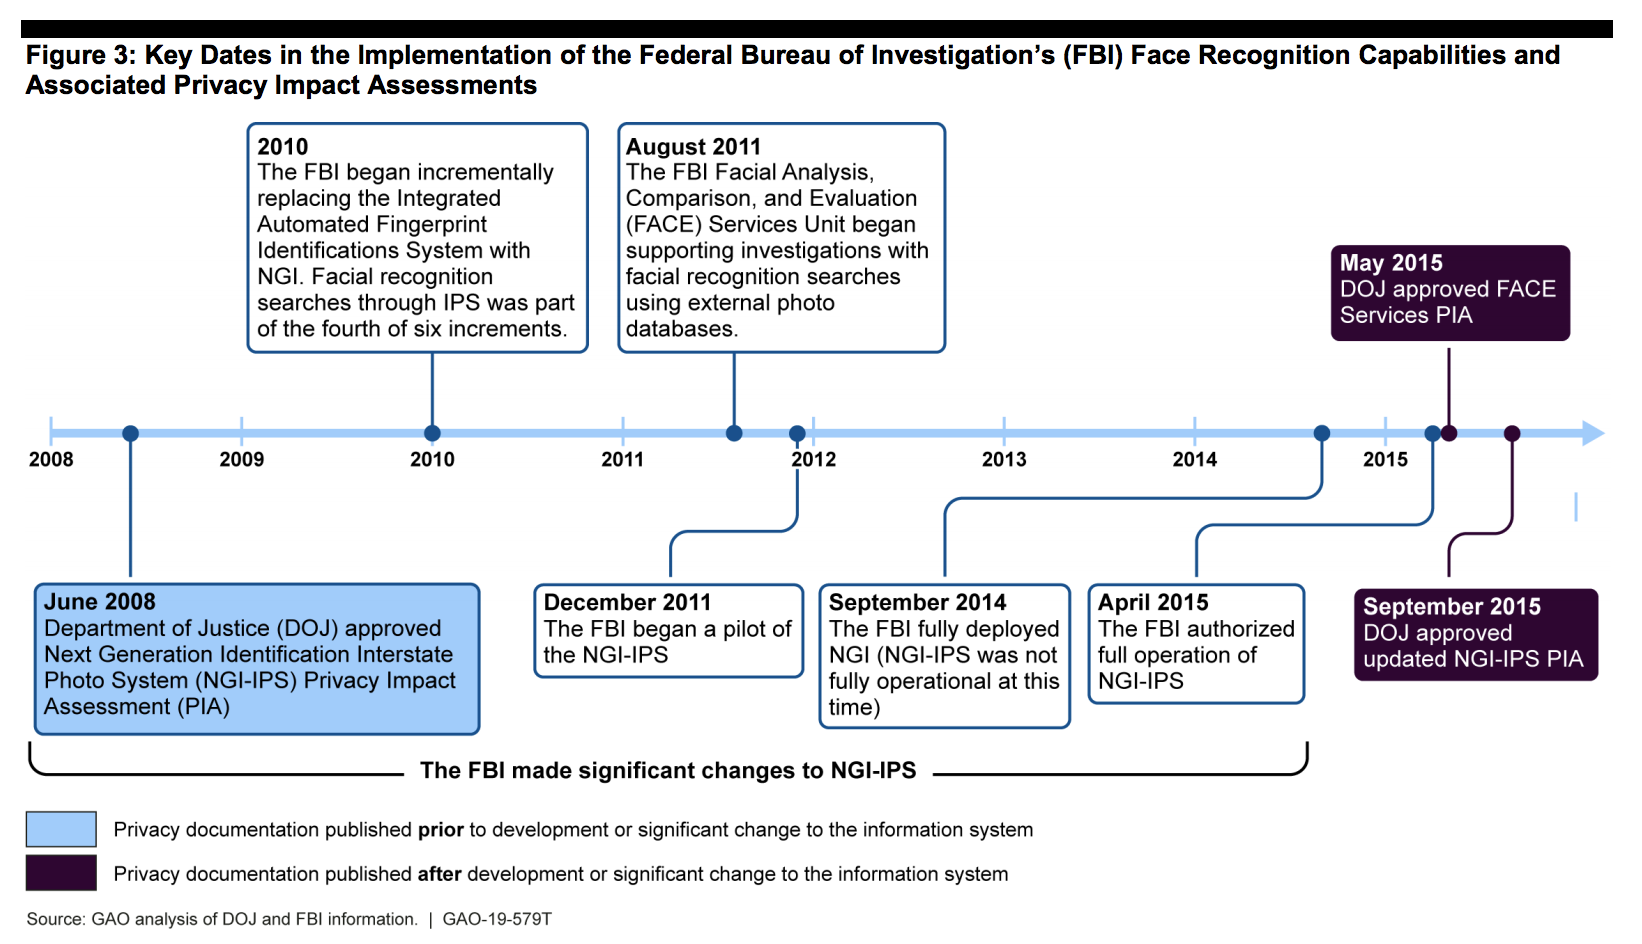 fbi dates implementations